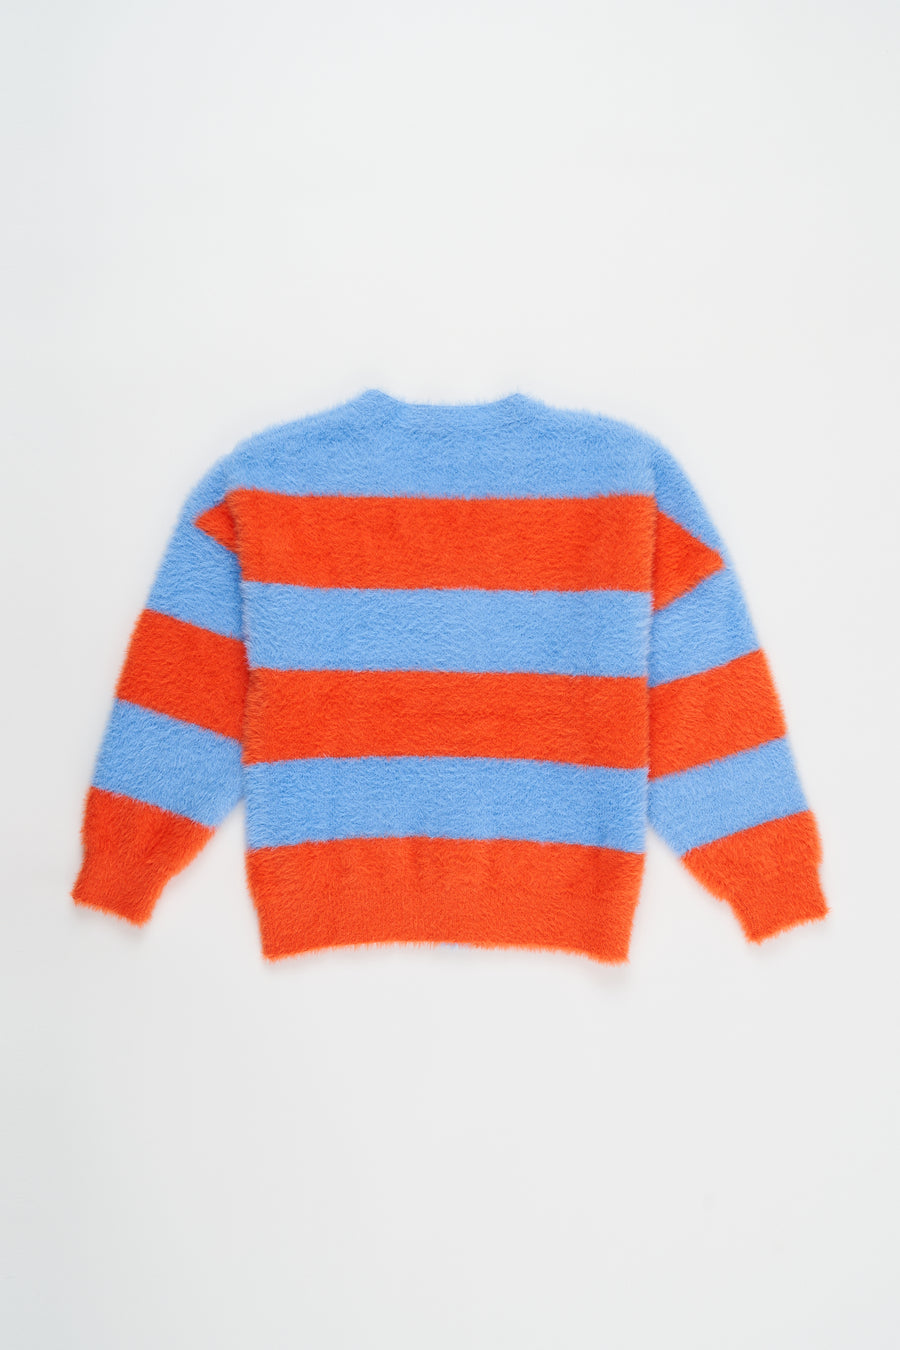 Maison Mangostan - stripes cardigan - orange/blue